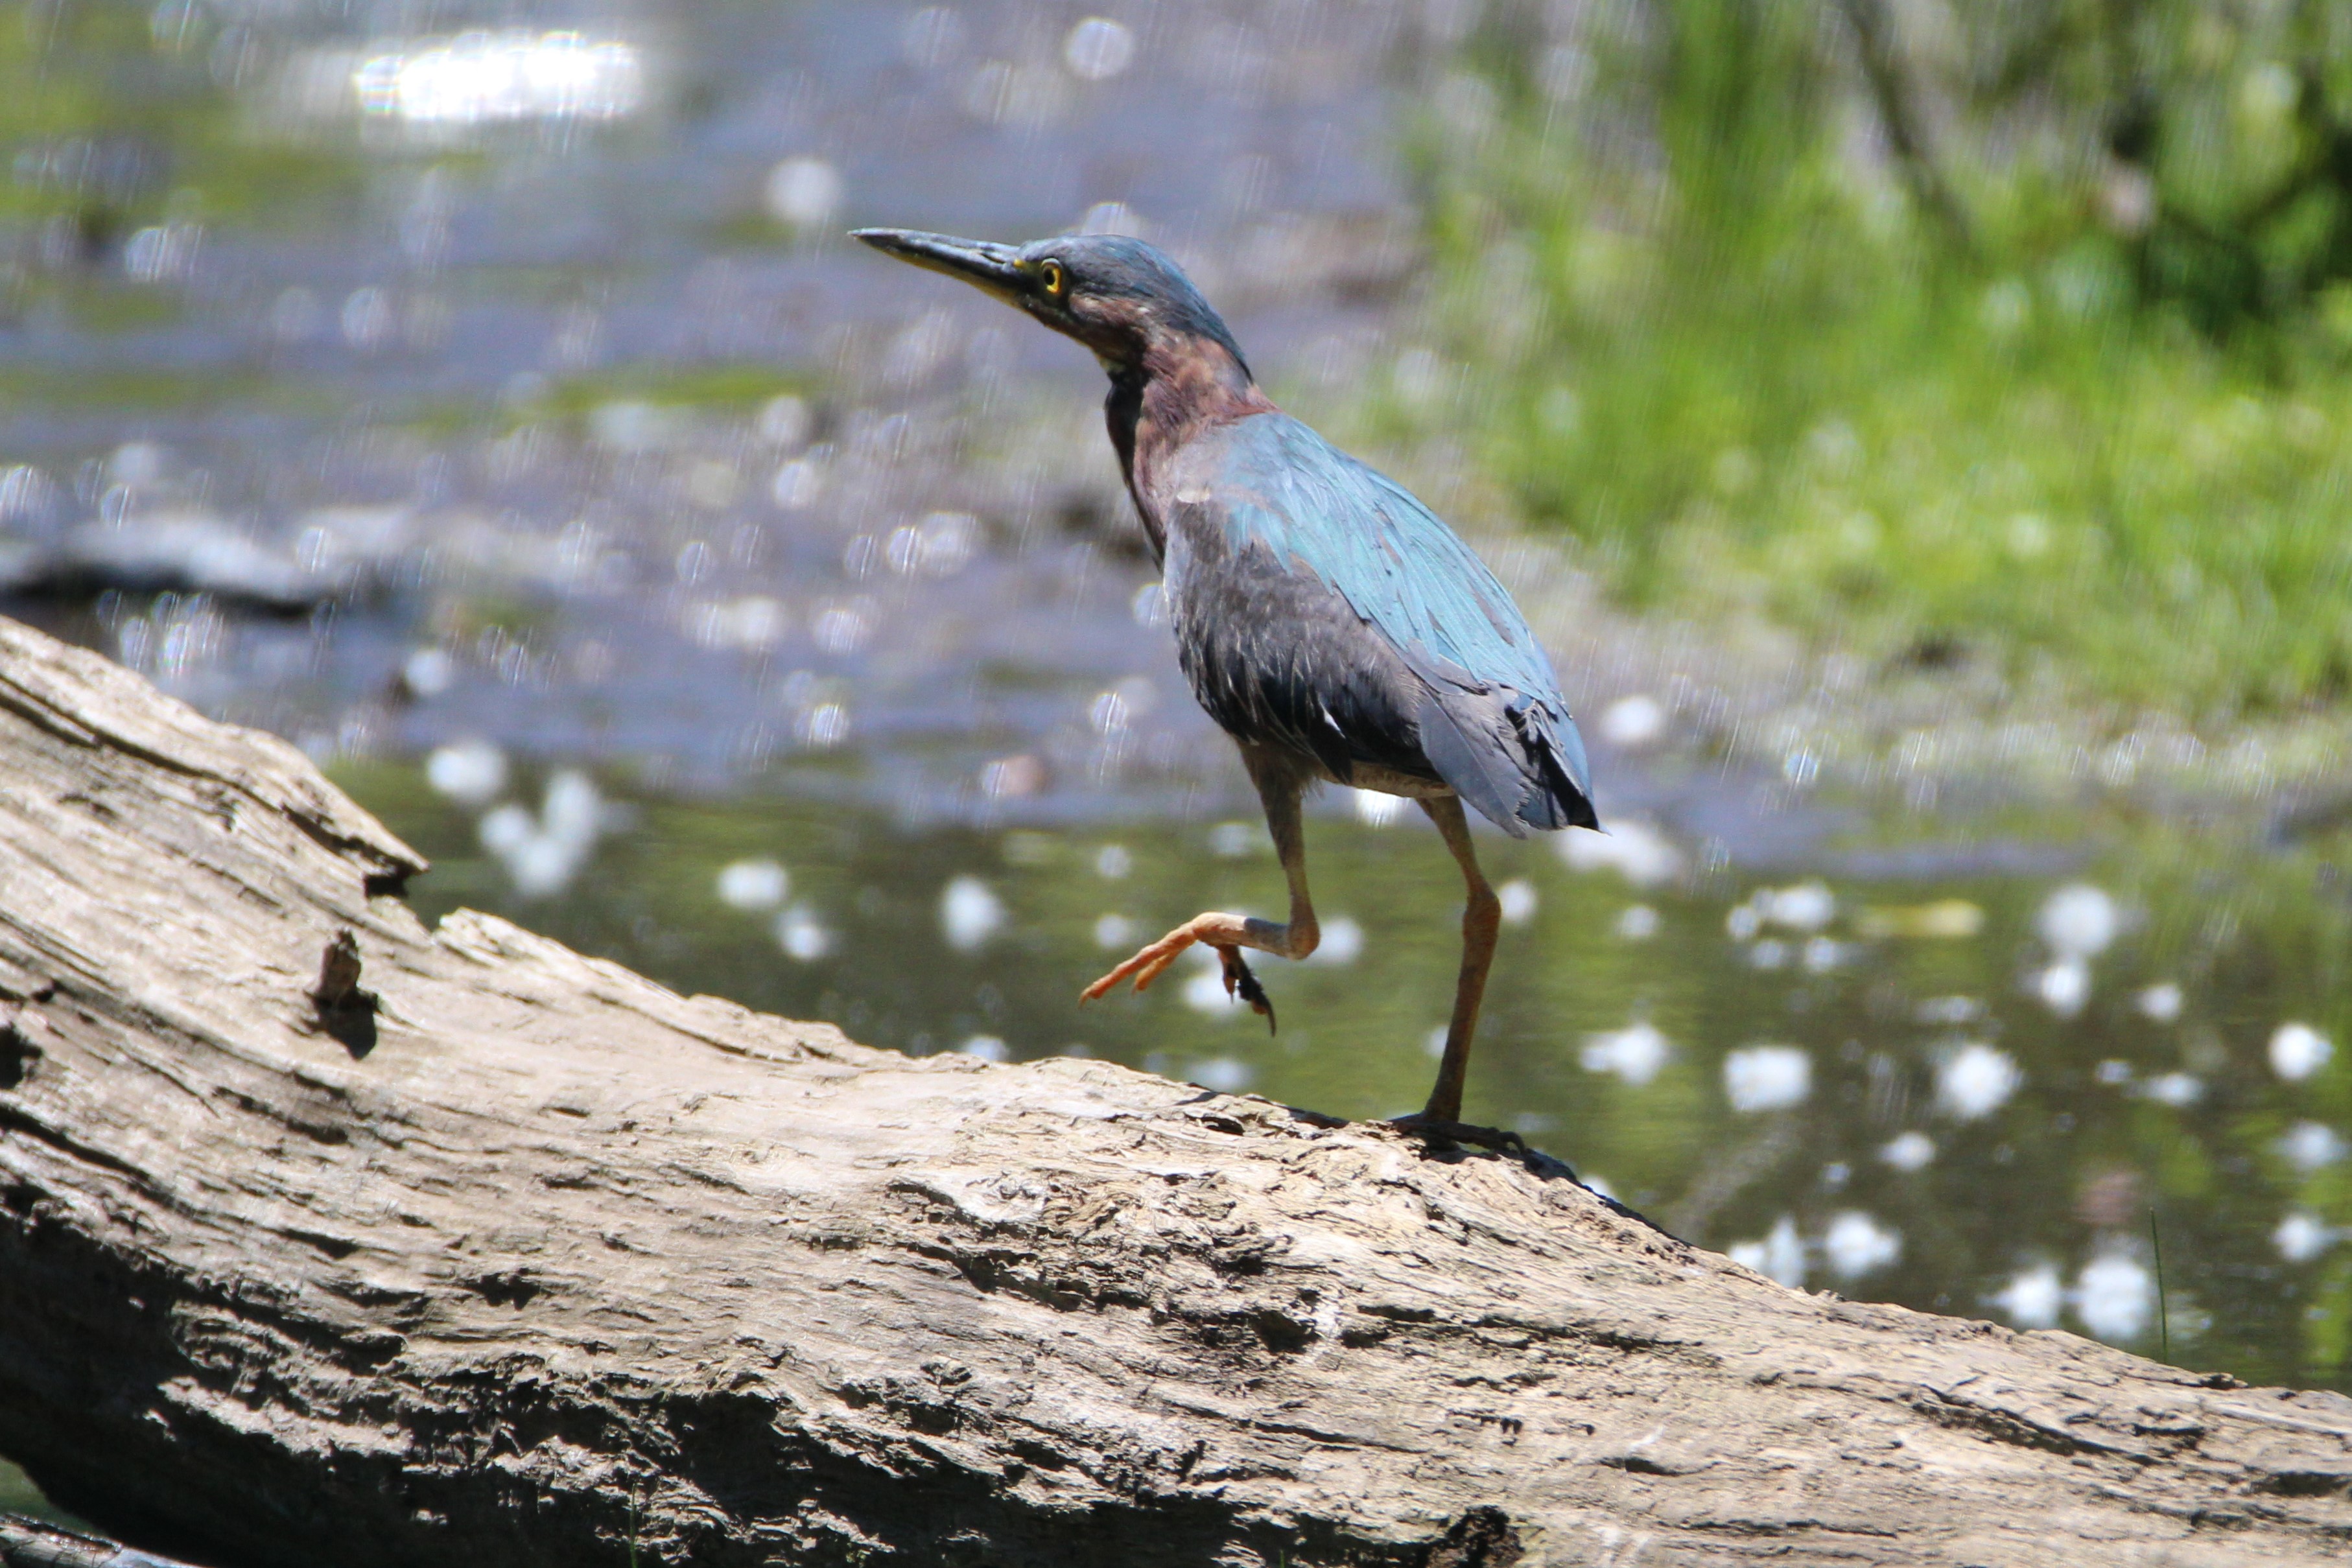 Green Heron find suitable habitat in Willowbrook Park. Photo: Dave Ostapiuk